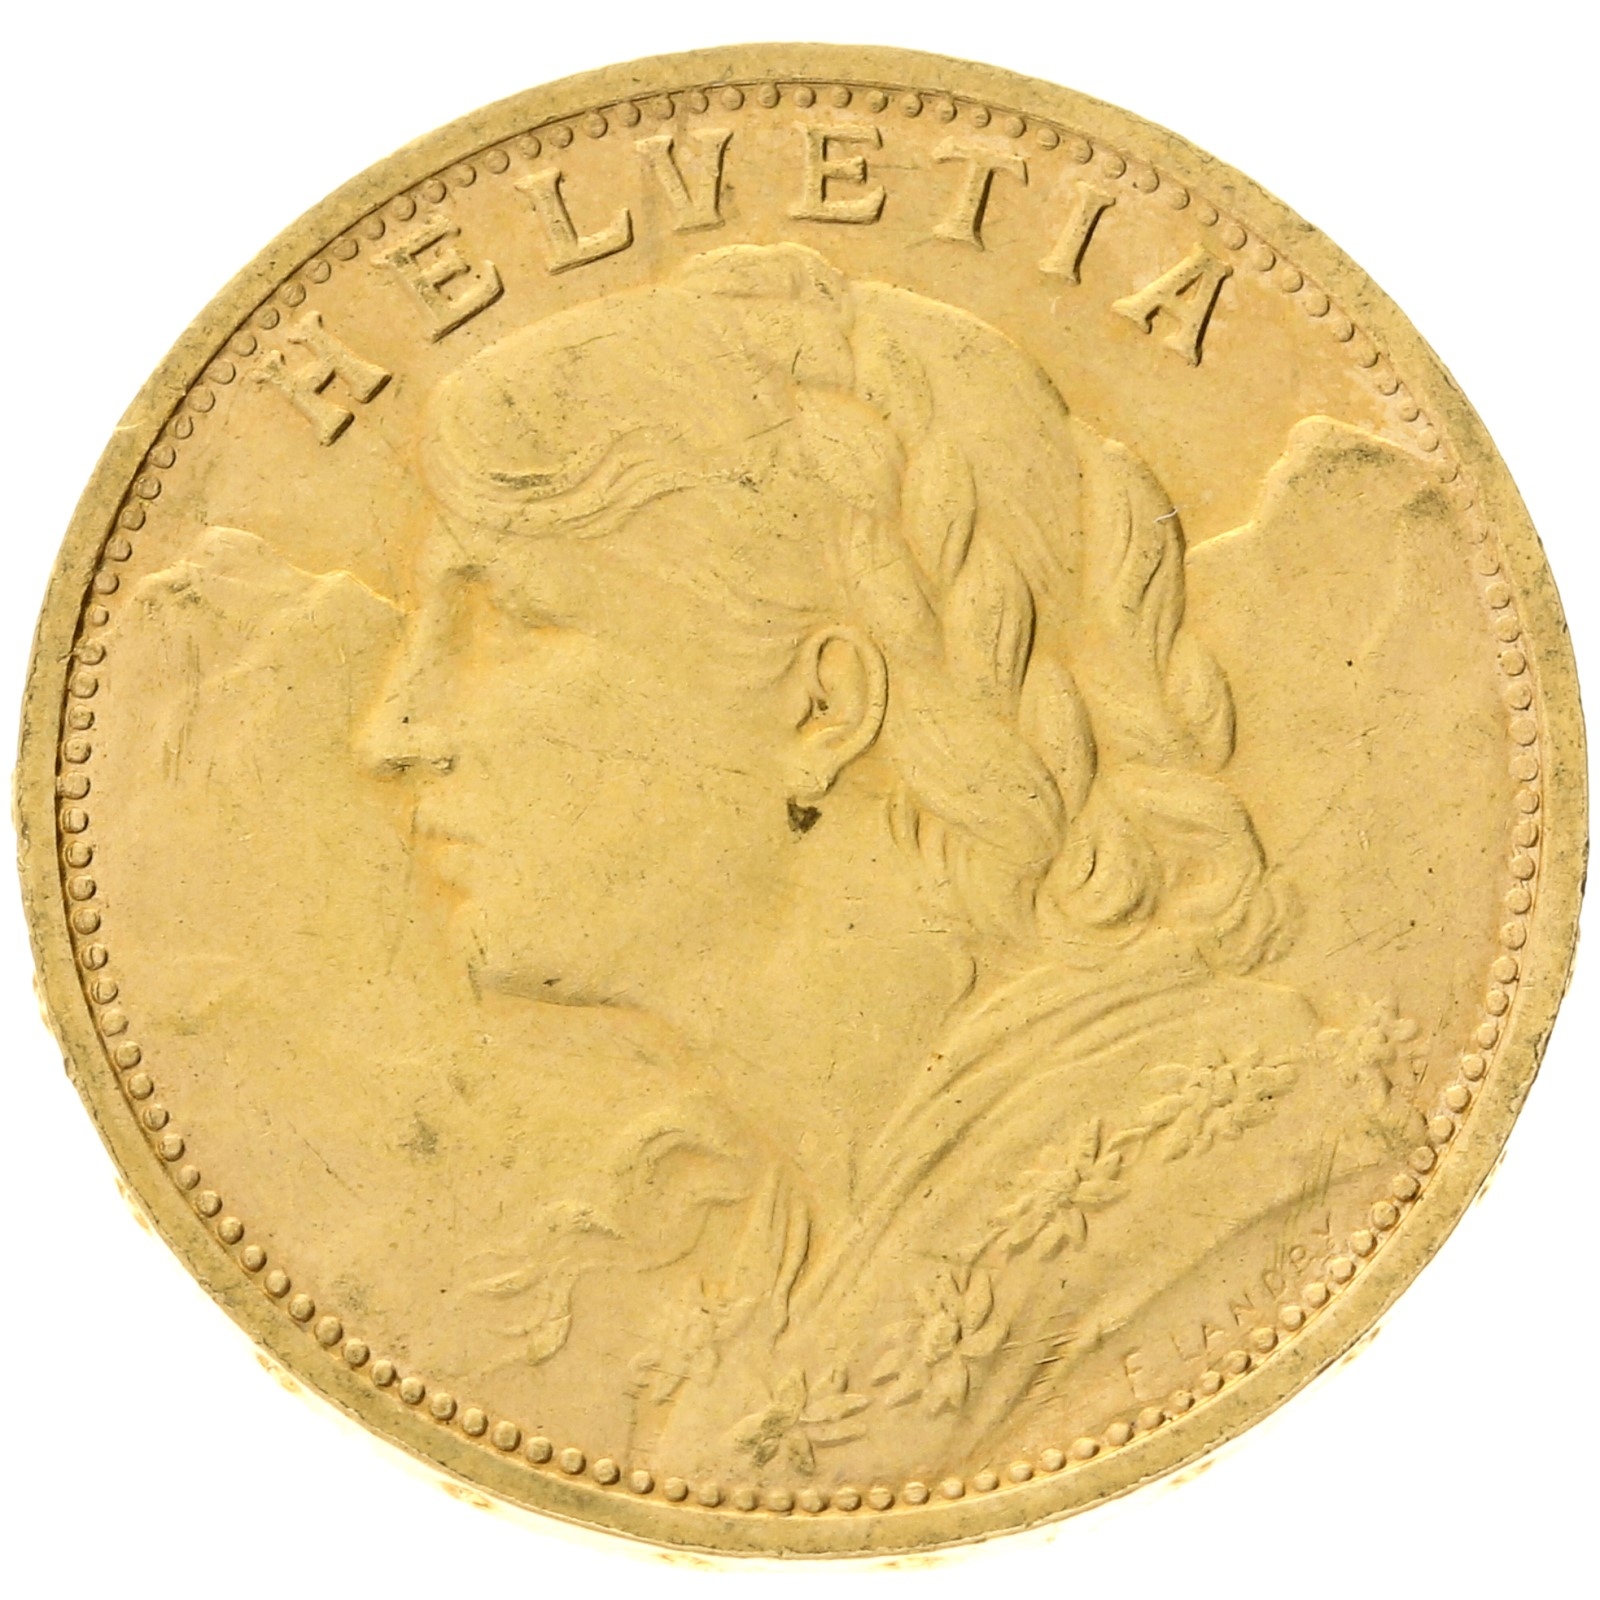 Switzerland - 20 francs - 1935 - L - RESTRIKE